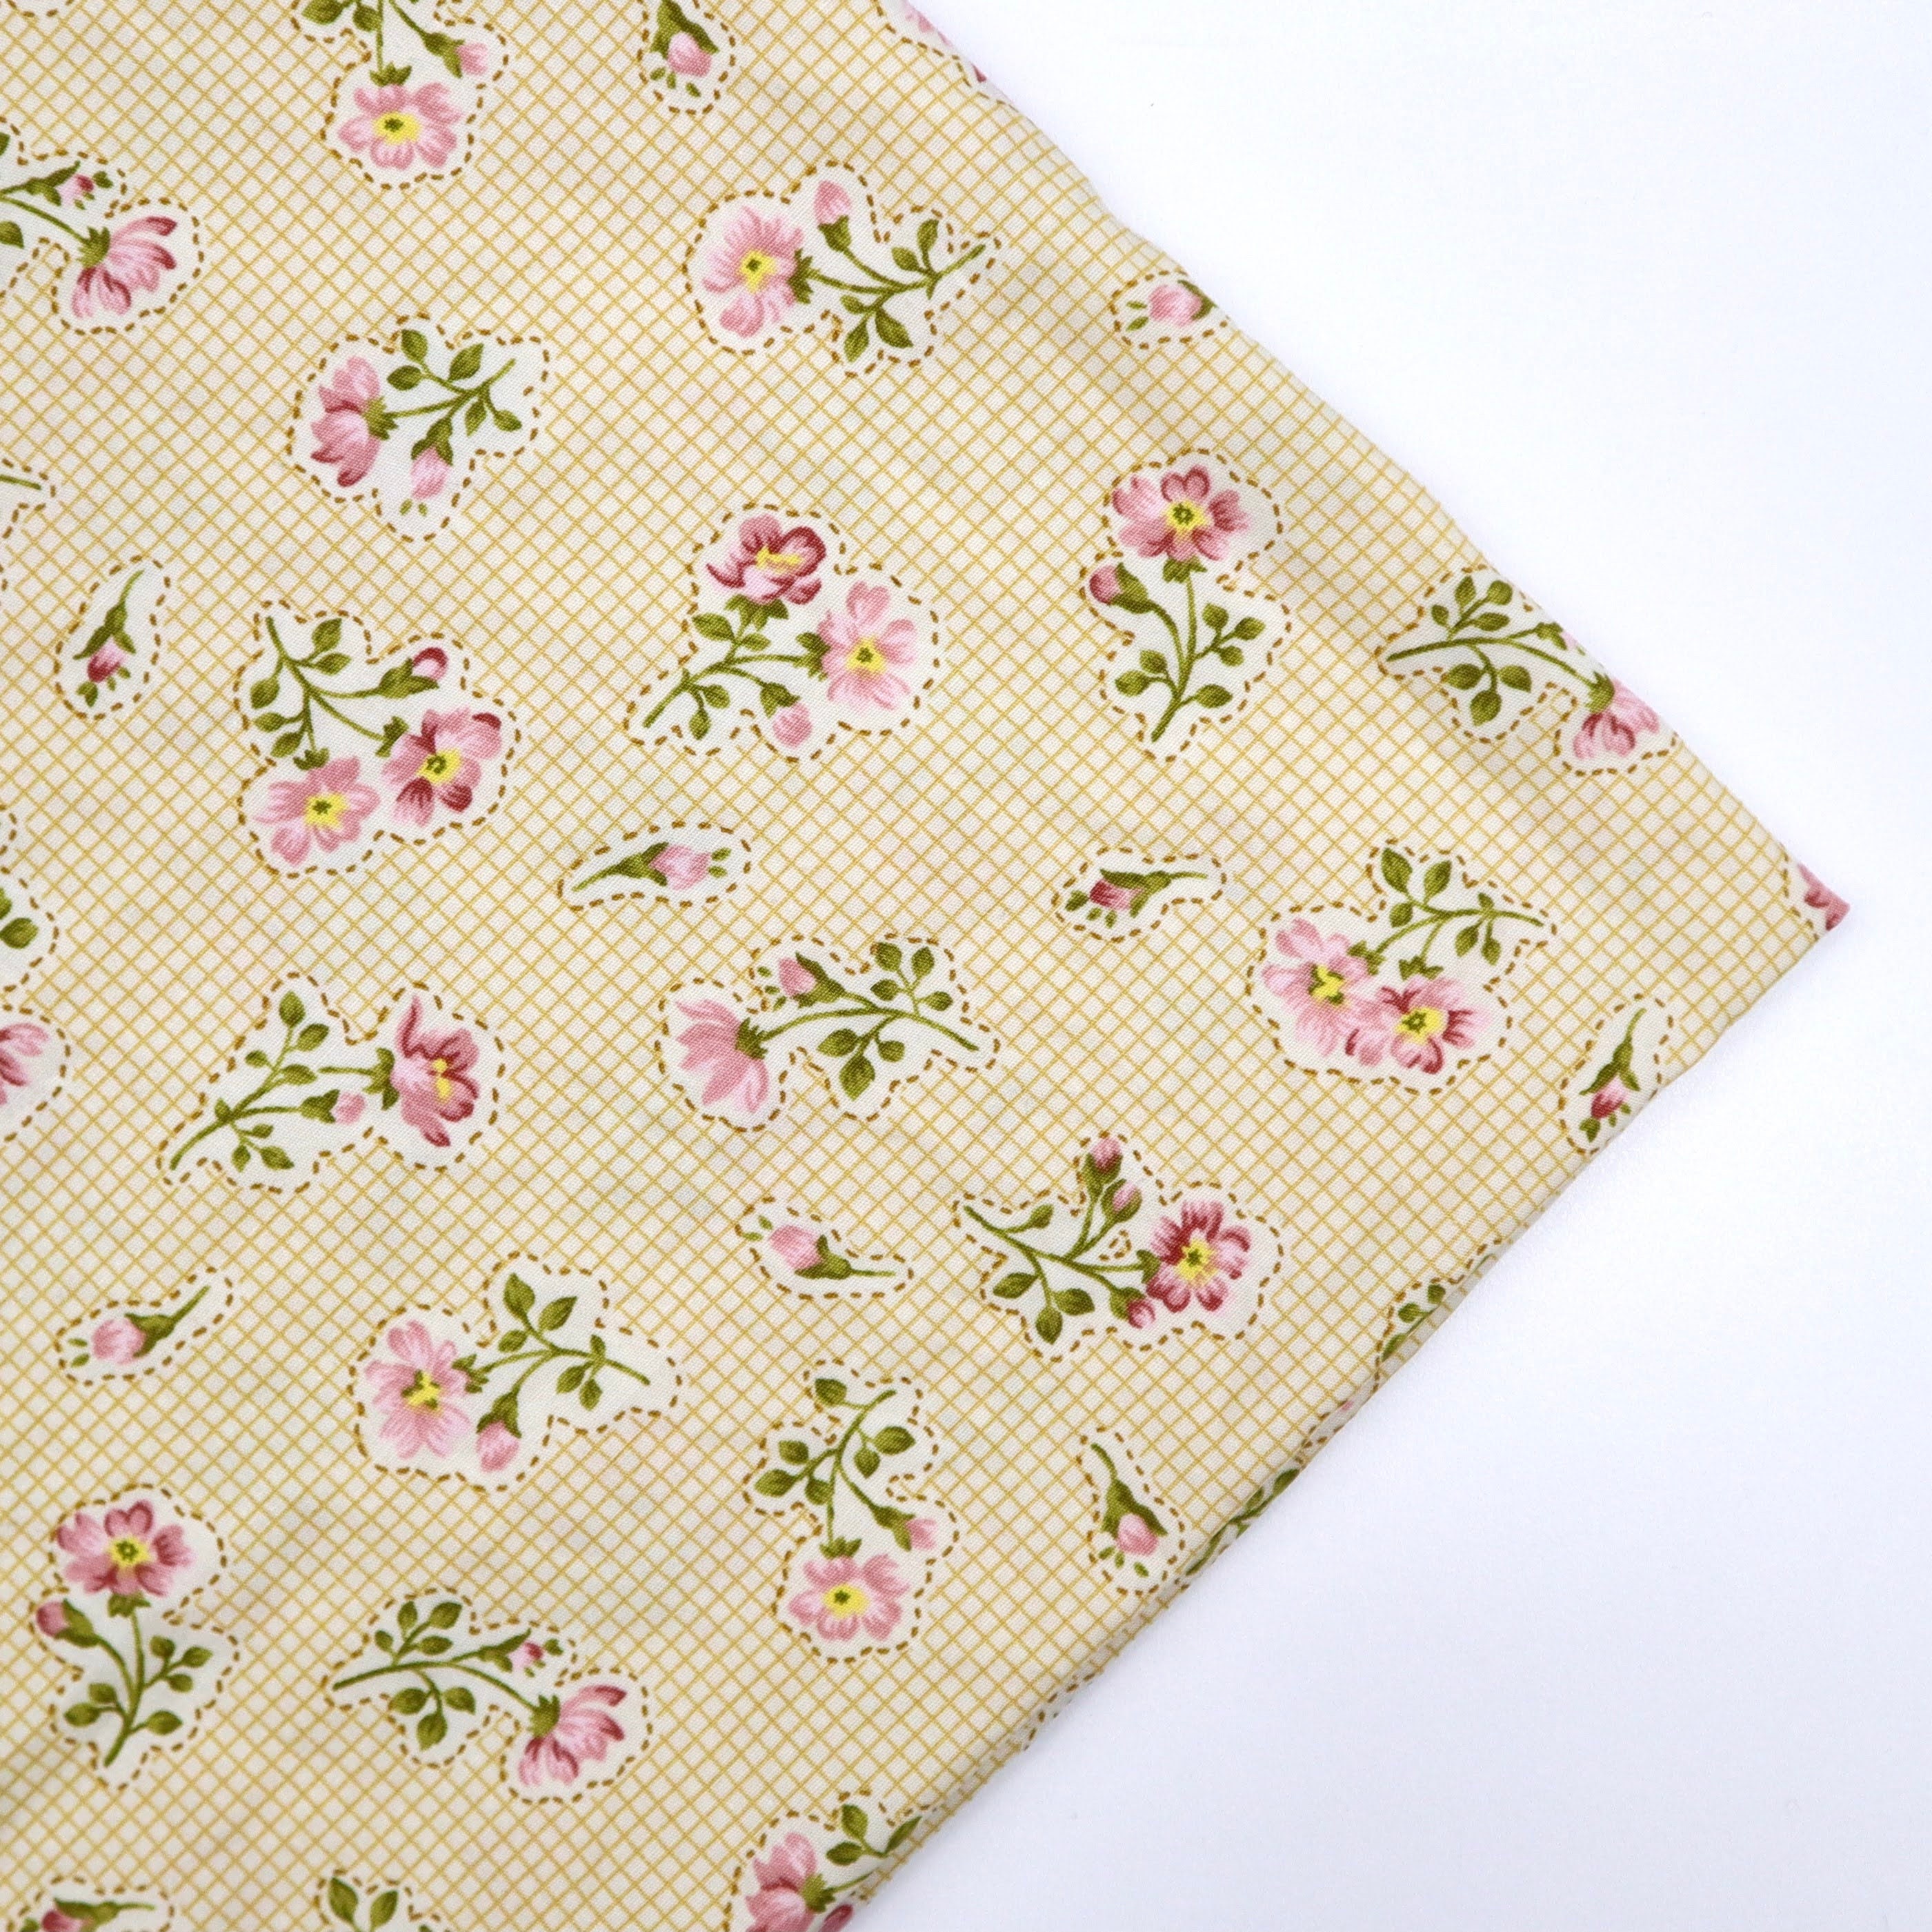 Yellow Small Flower Cotton print-110202 - Shop Fabrics like Cotton, Rayon,  Prints, Checks, Plain